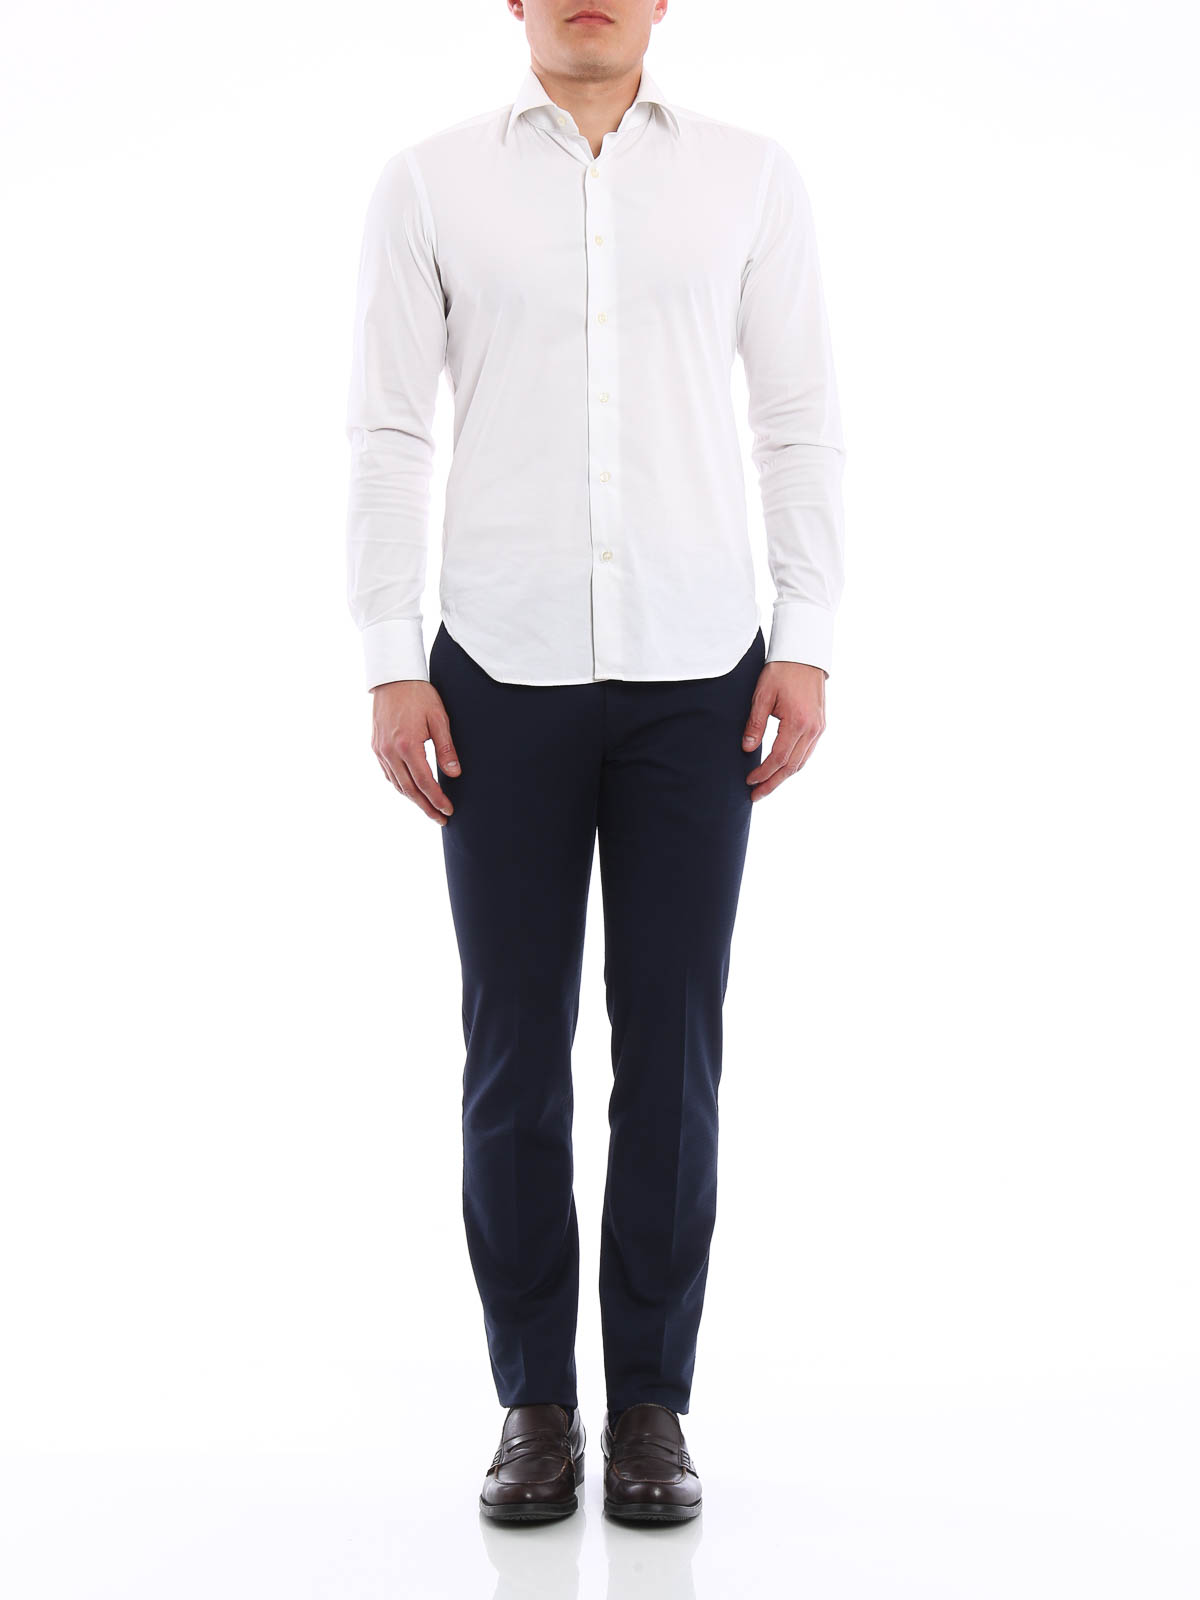 Buy Beige Trousers  Pants for Men by Merchant Marine Online  Ajiocom